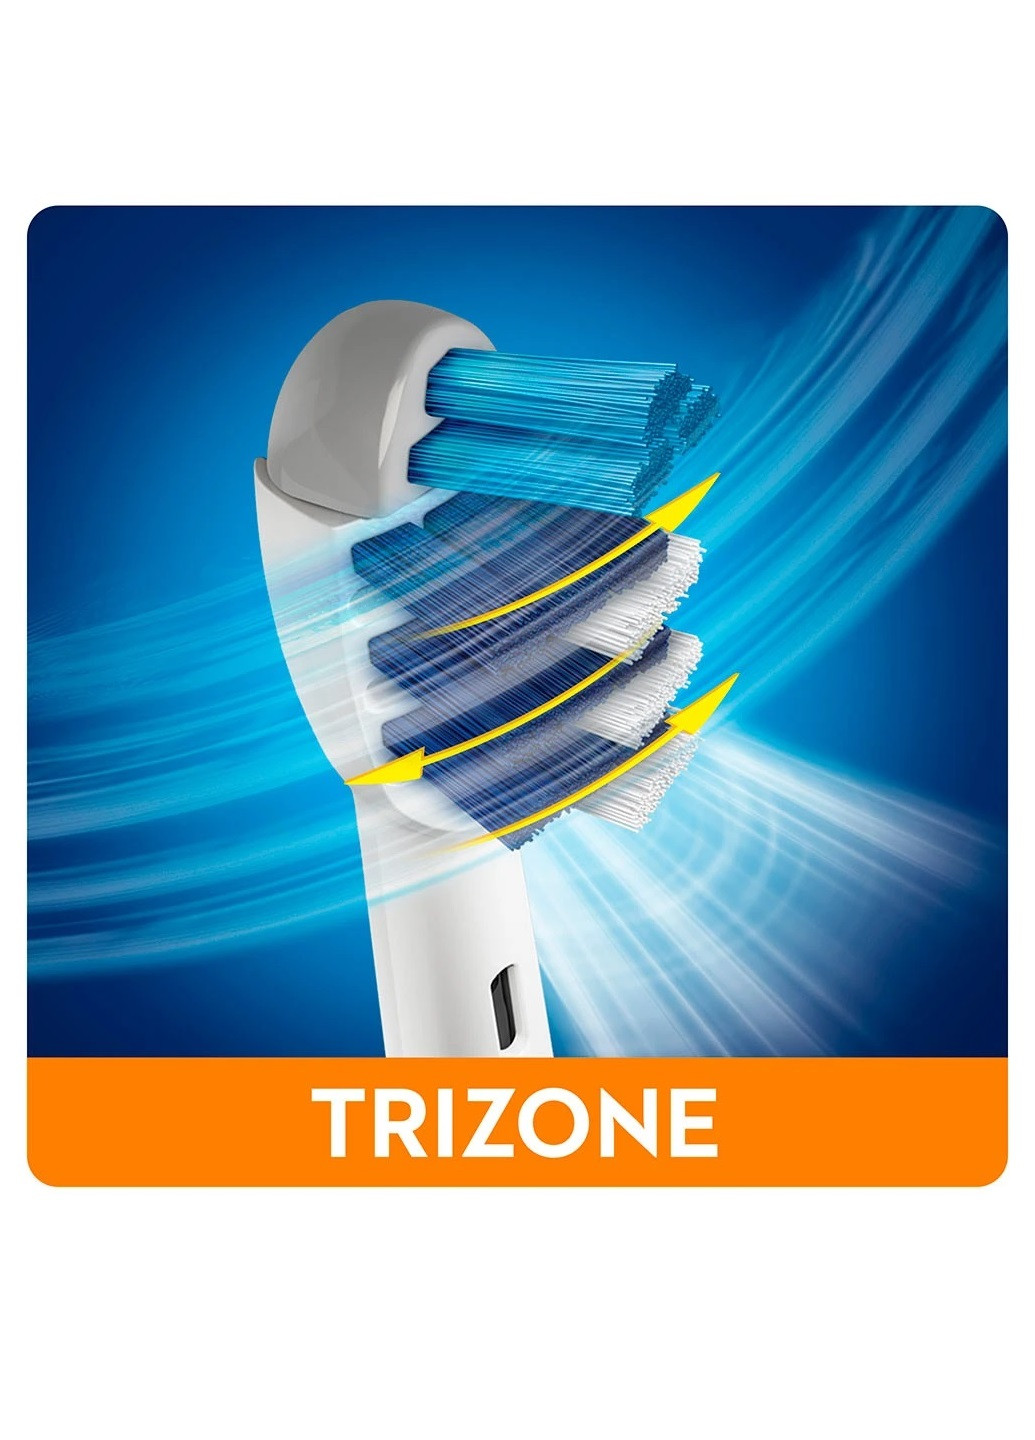 Набор зубных насадок Braun Trizone 2шт Oral-B (257100236)